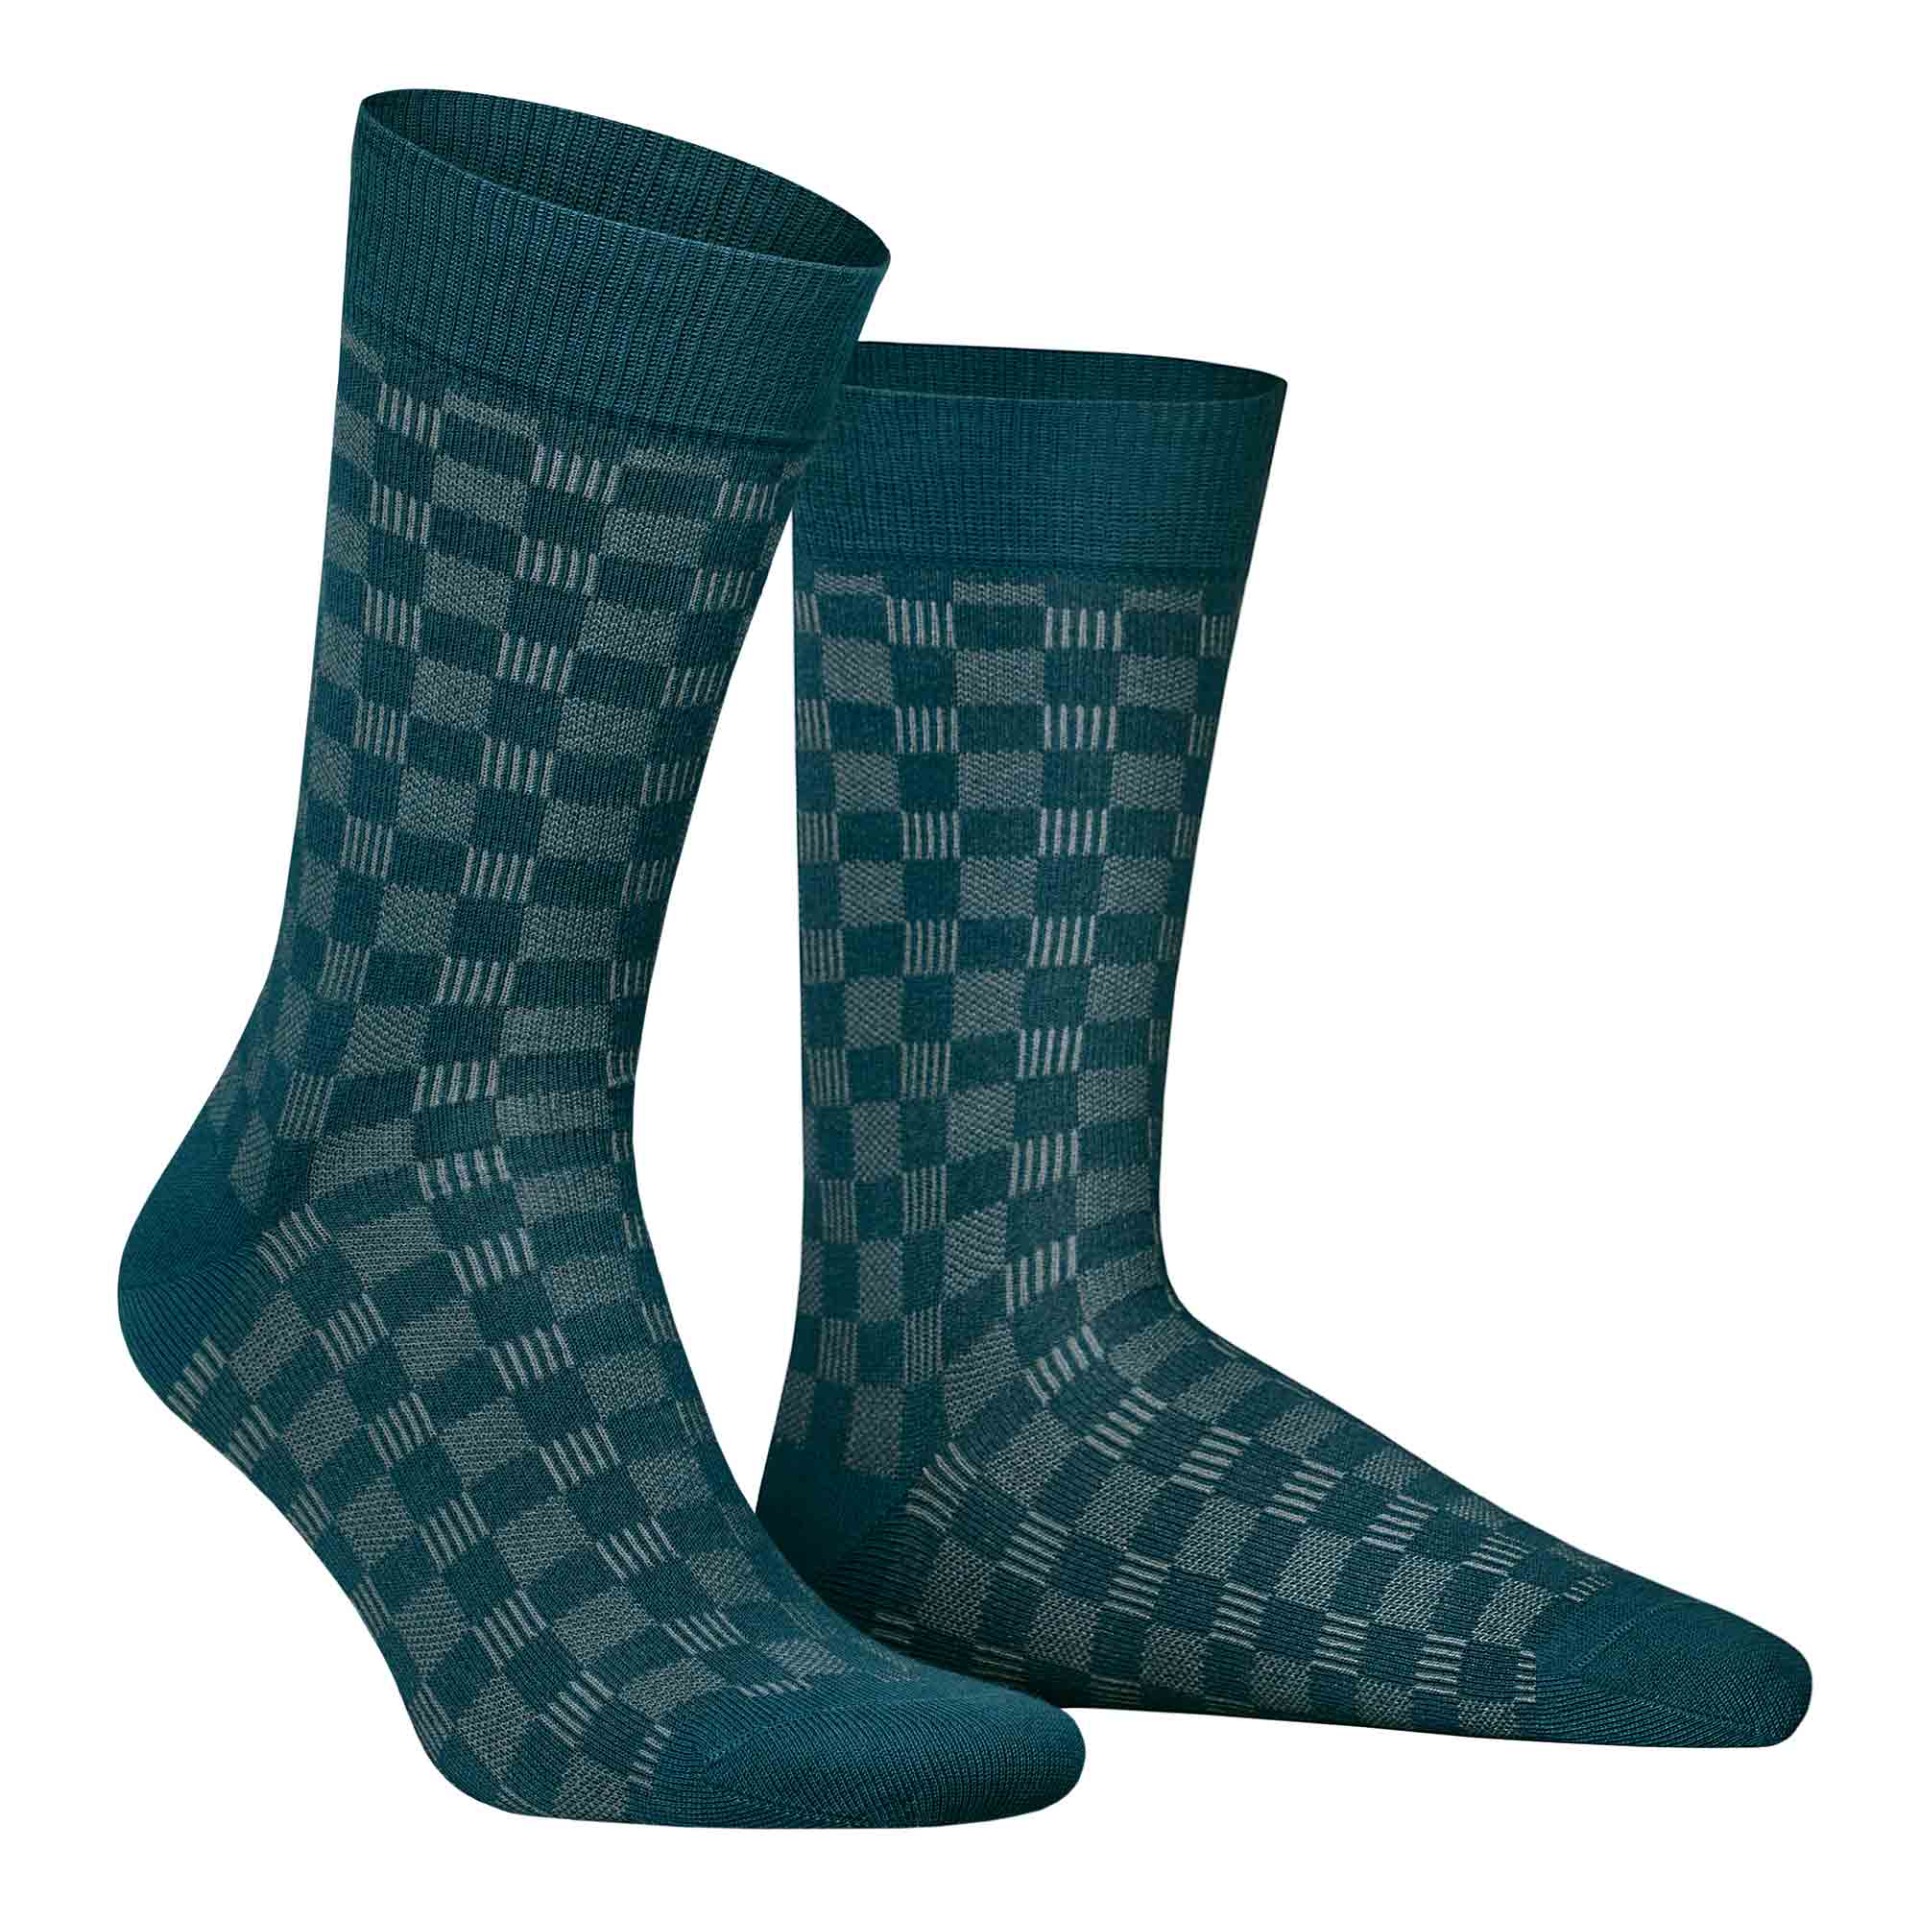 HUDSON Herren BOARD -  39/42 - Socken mit Schachbrett-Muster - Capri blue 0111 (Blau)